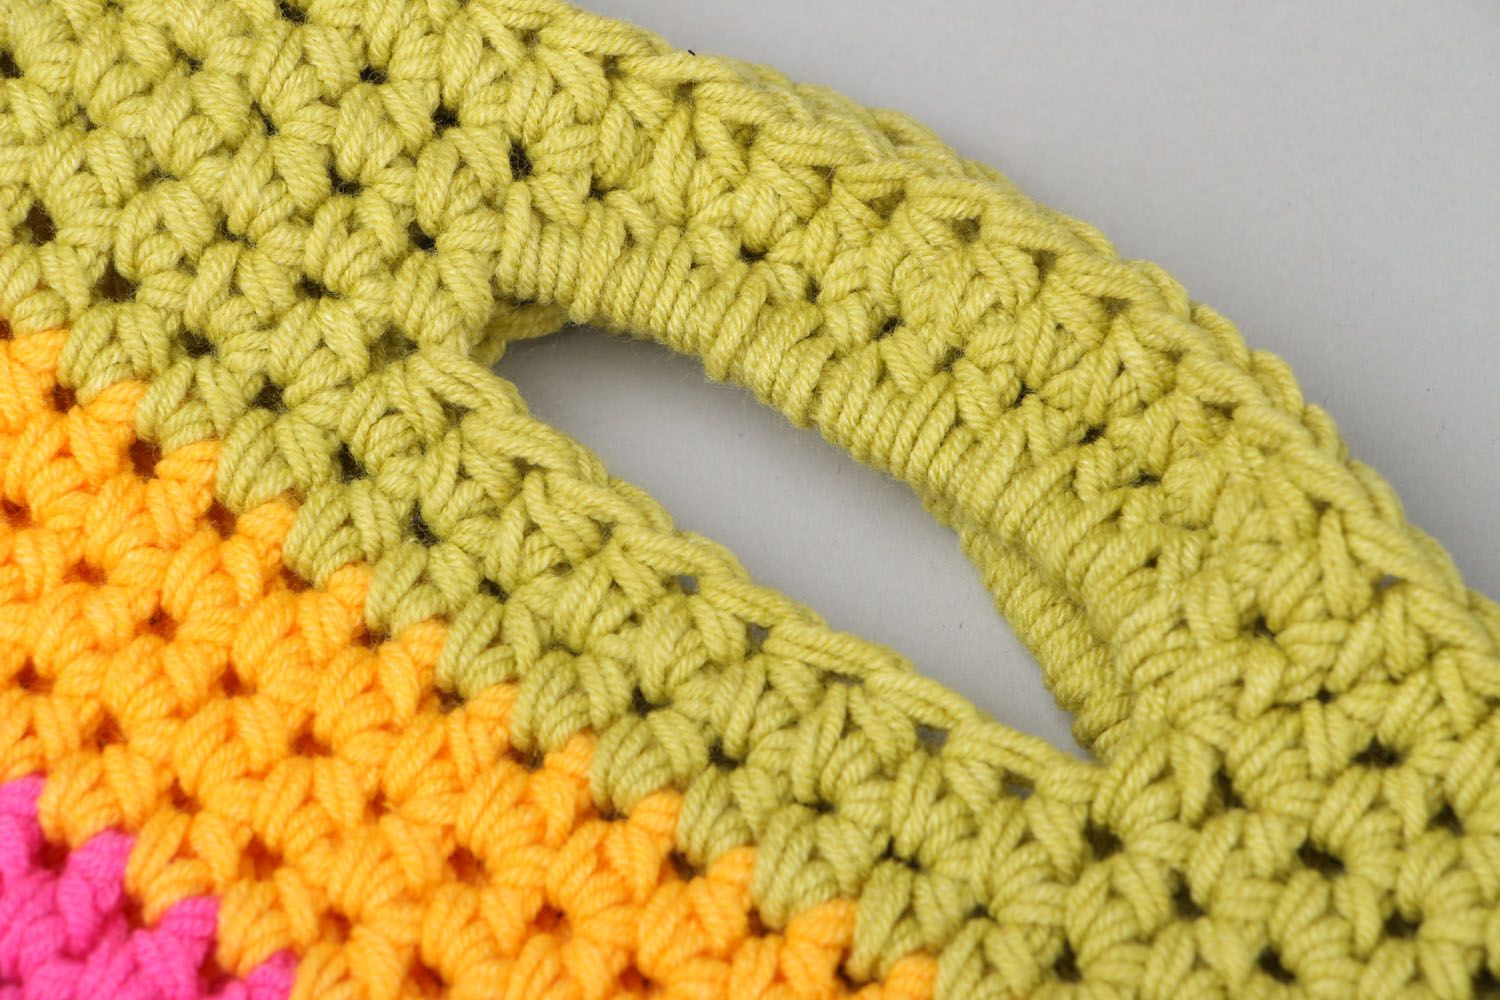 Cotton crocheted bag photo 2